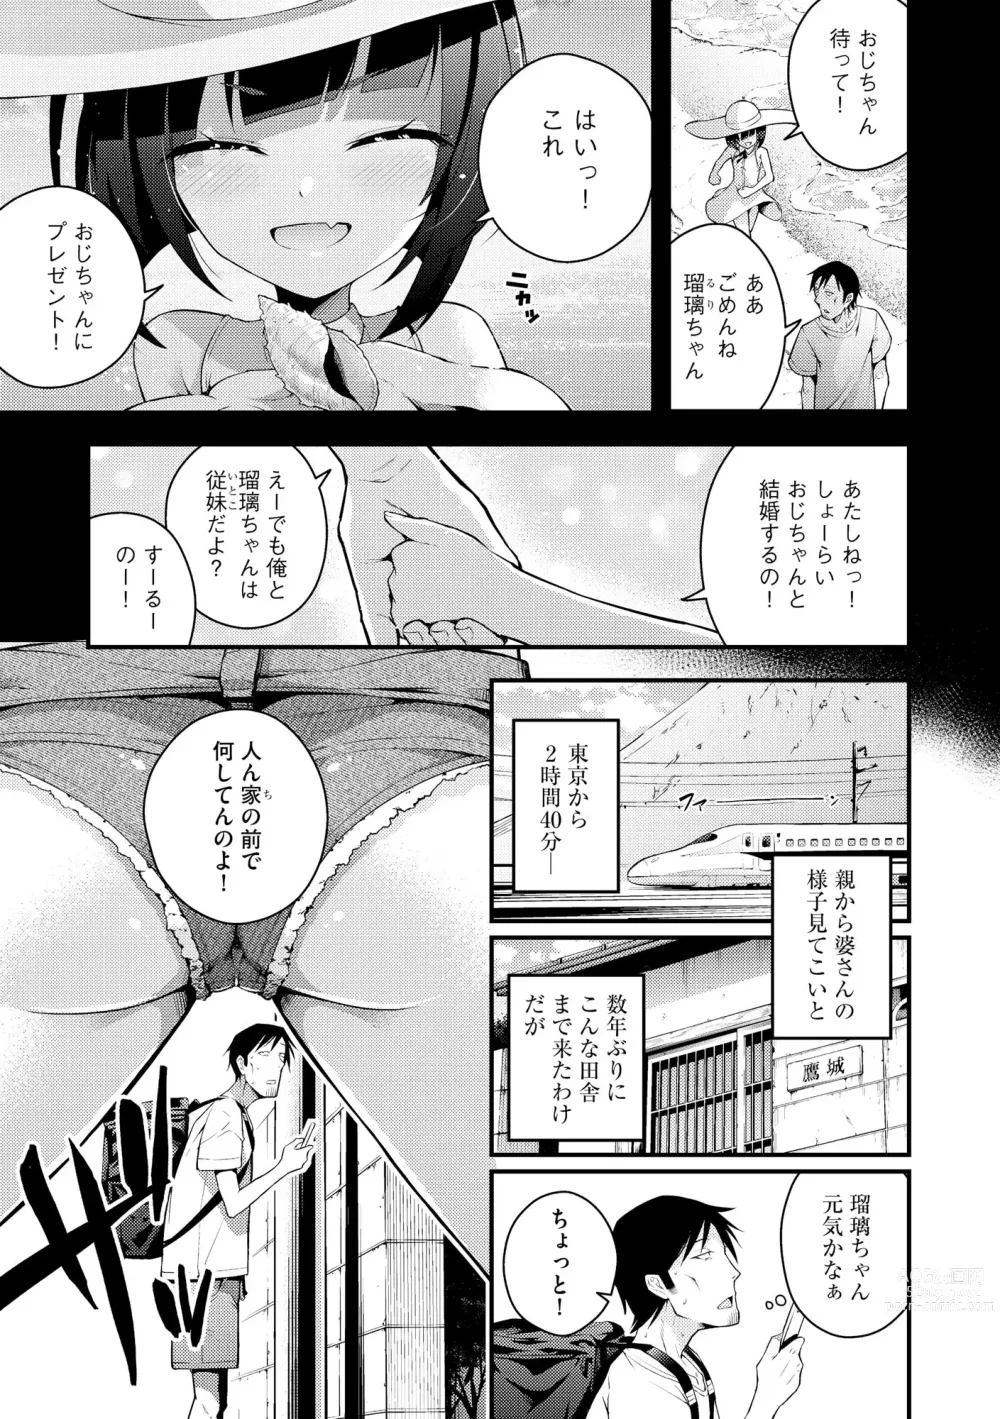 Page 7 of manga Cyberia Plus Vol. 16